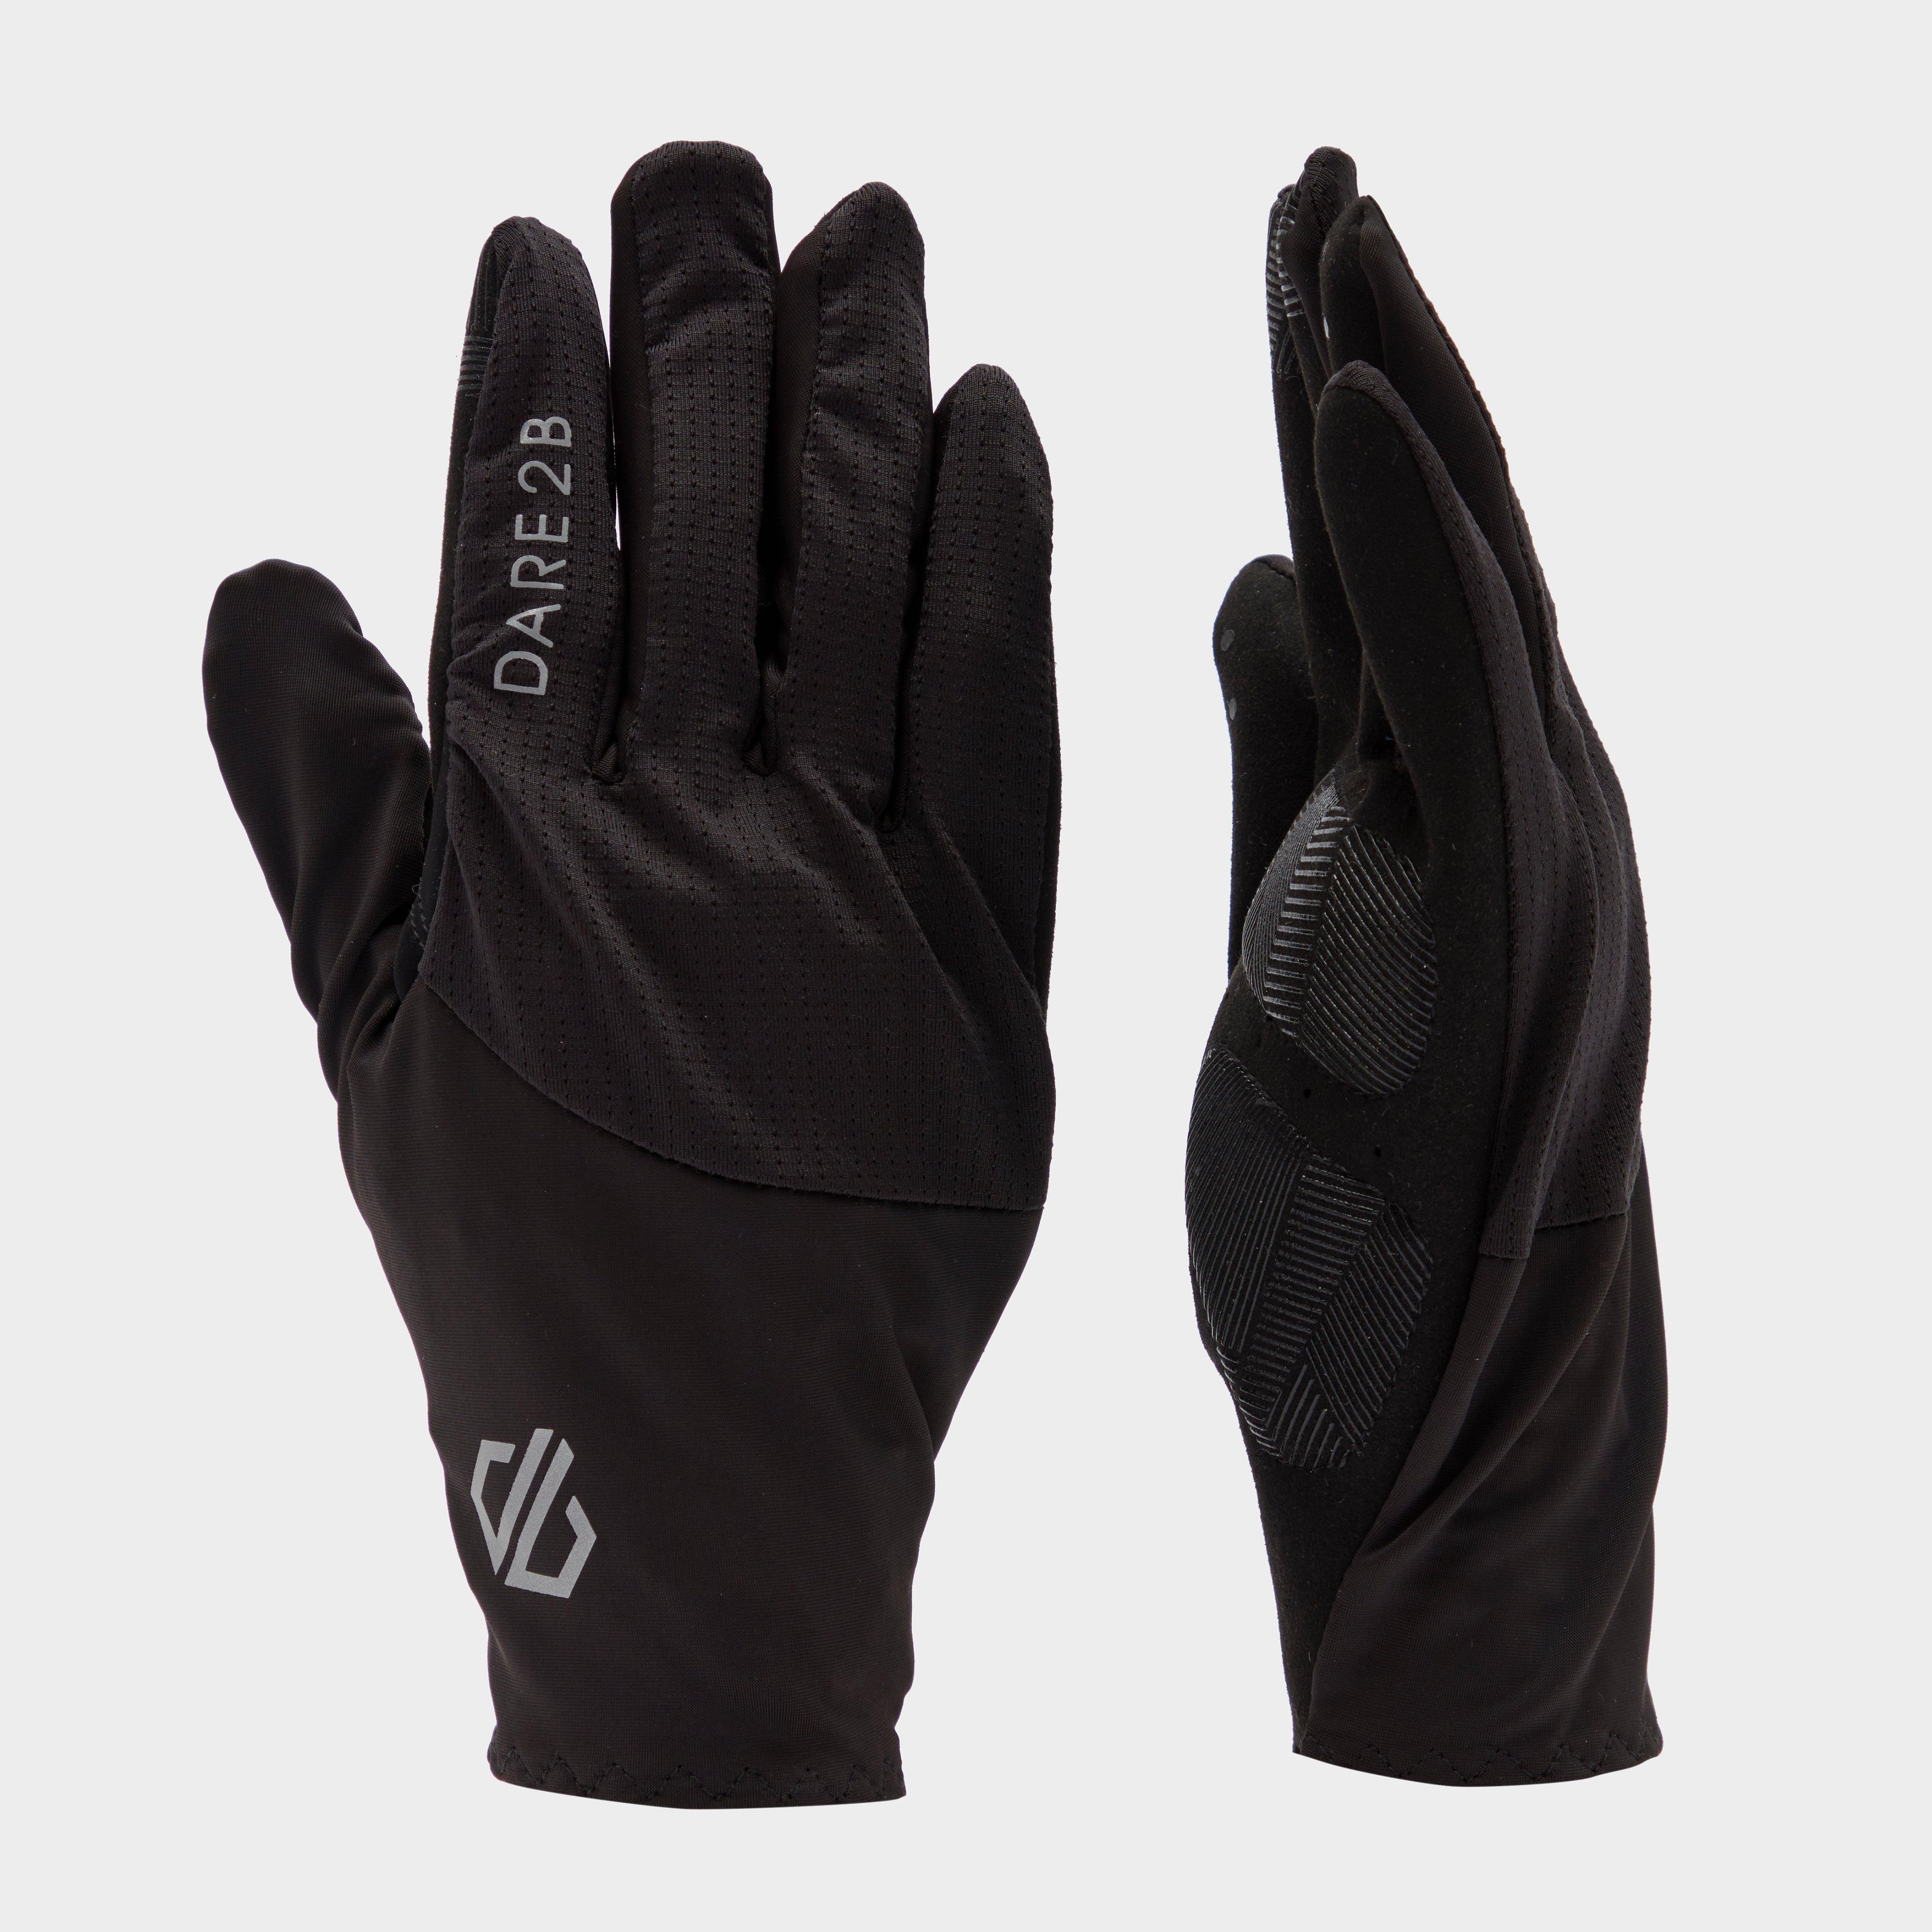 Blacks Dare2b Men's Forcible Cycling Gloves, Black